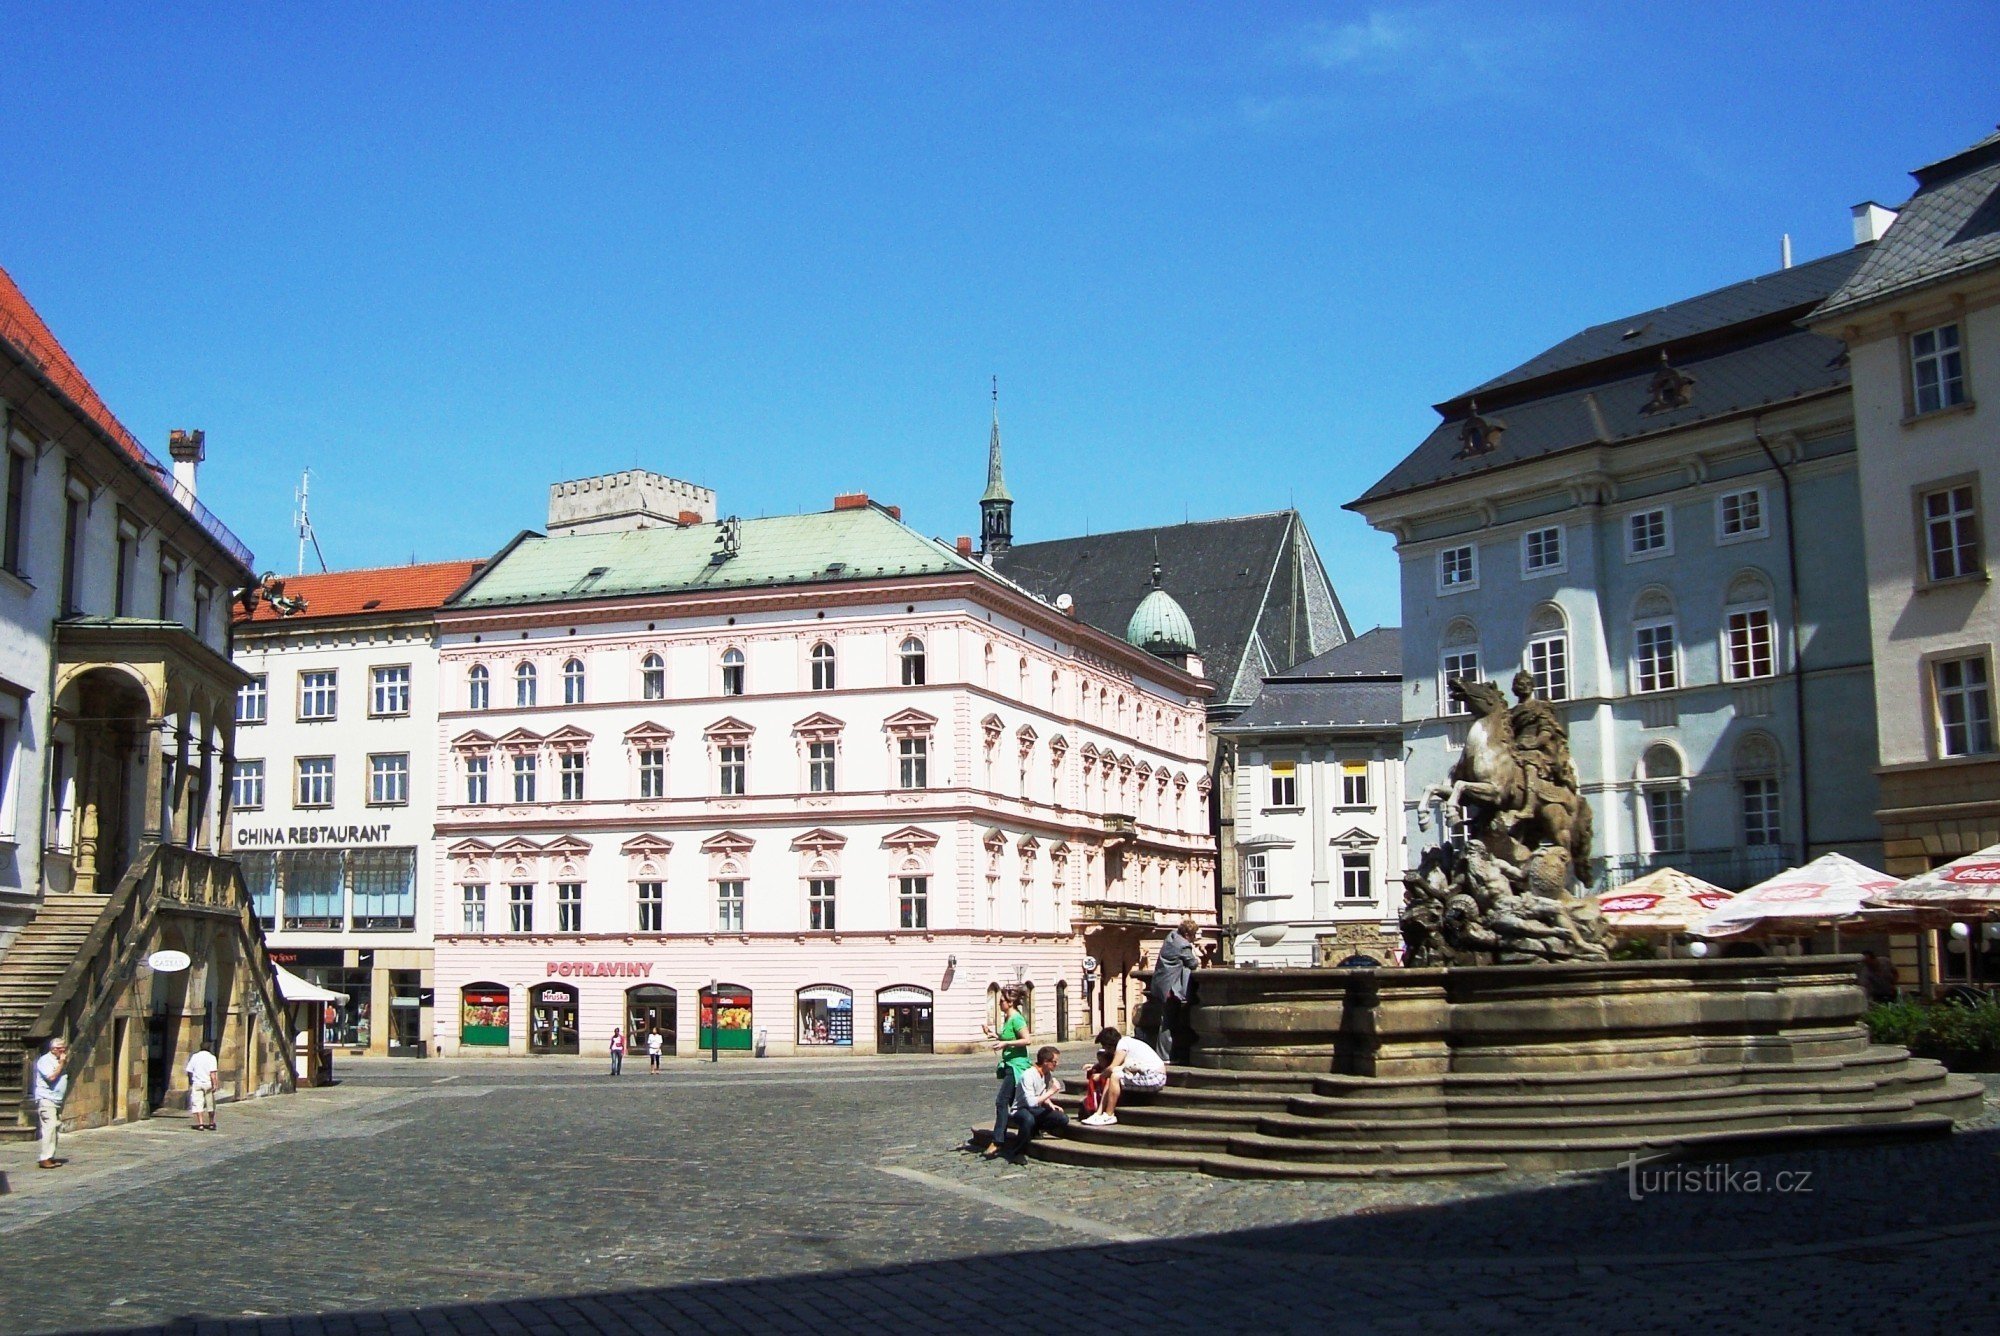 Olomouc-Horní náměstí-Фонтан Цезаря 1725 р. і колишній палац Дітріхштайн-Фо